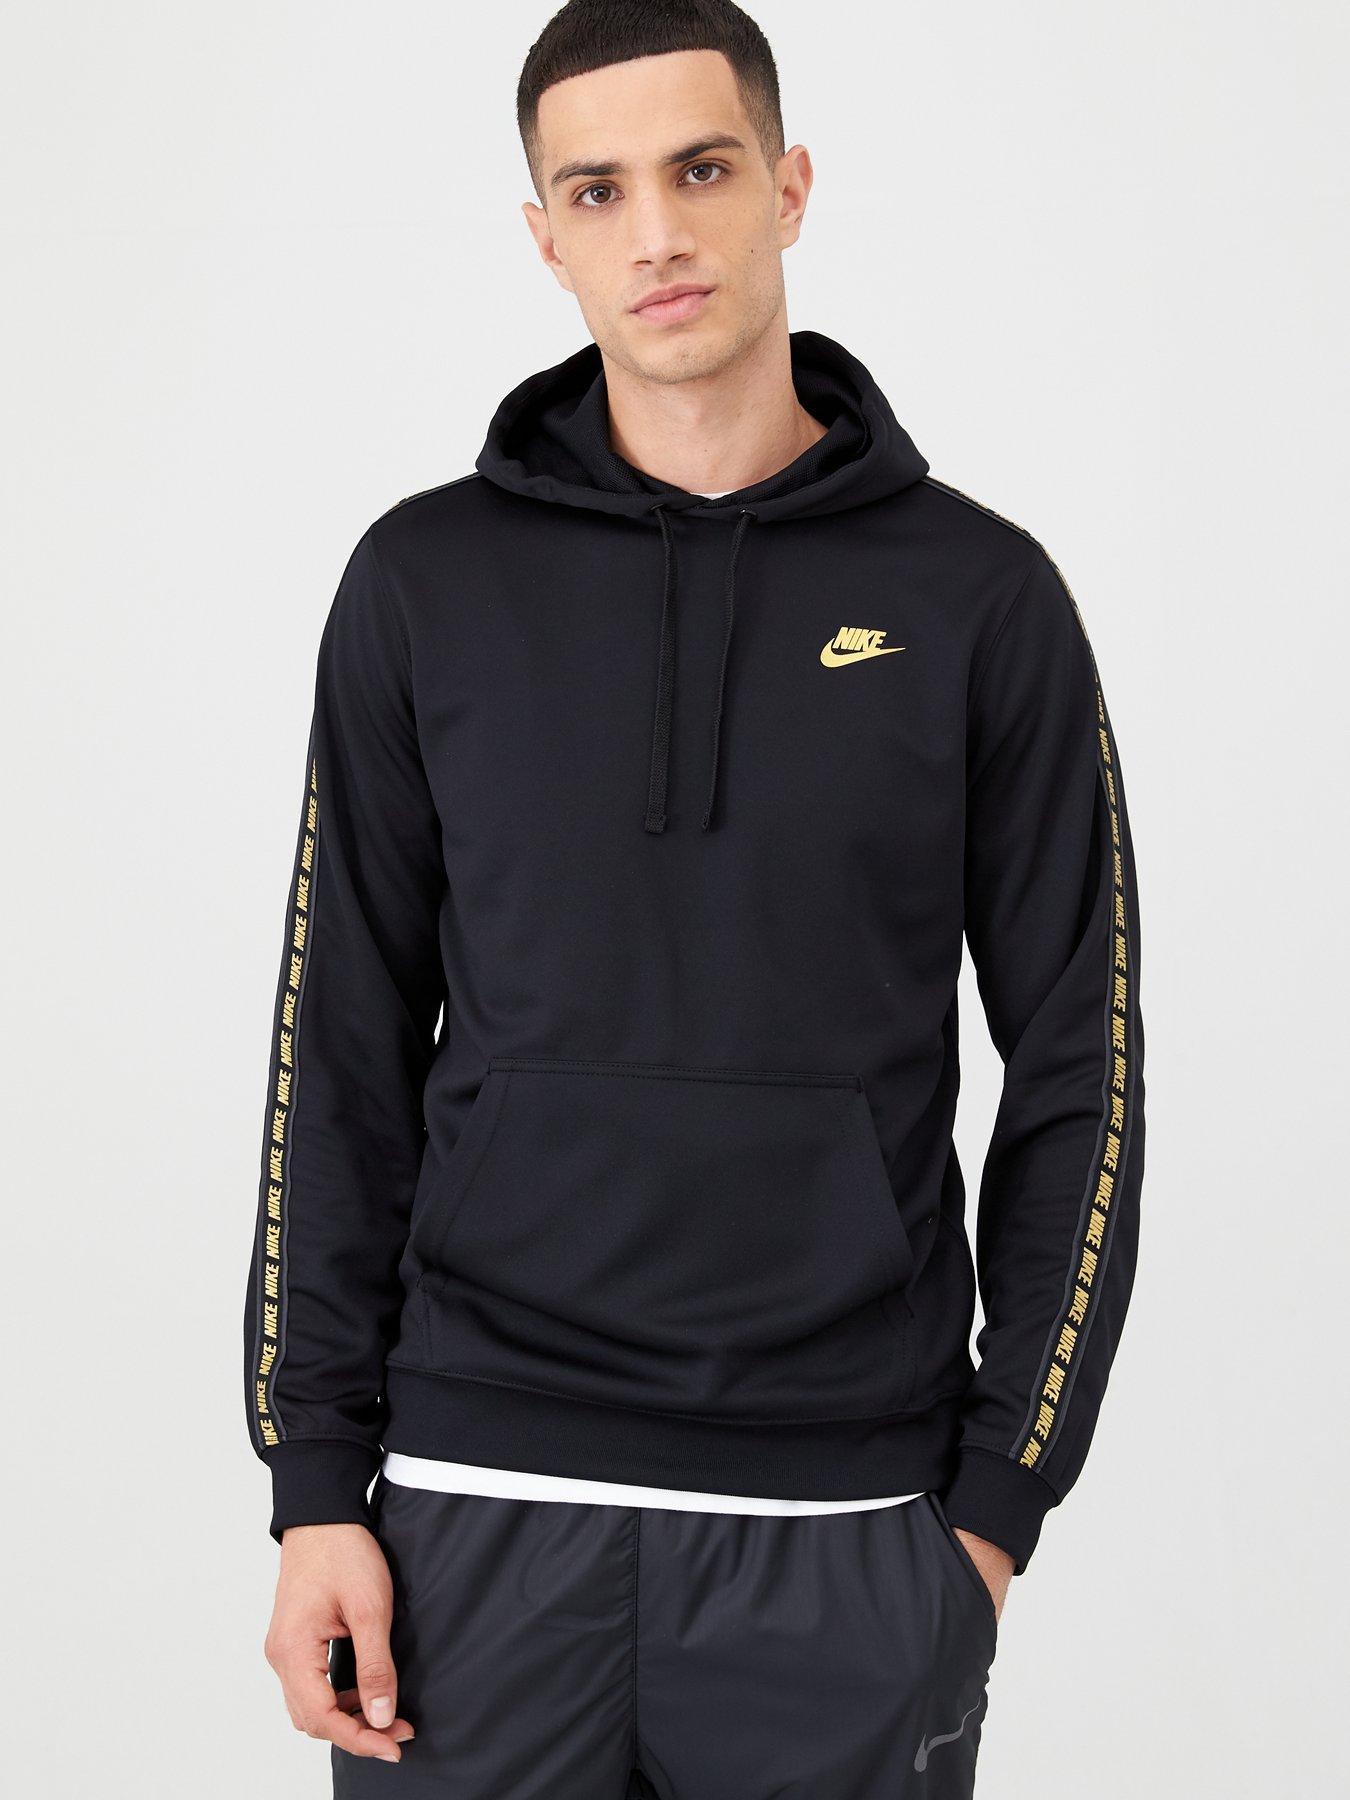 black and gold nike hoodie mens